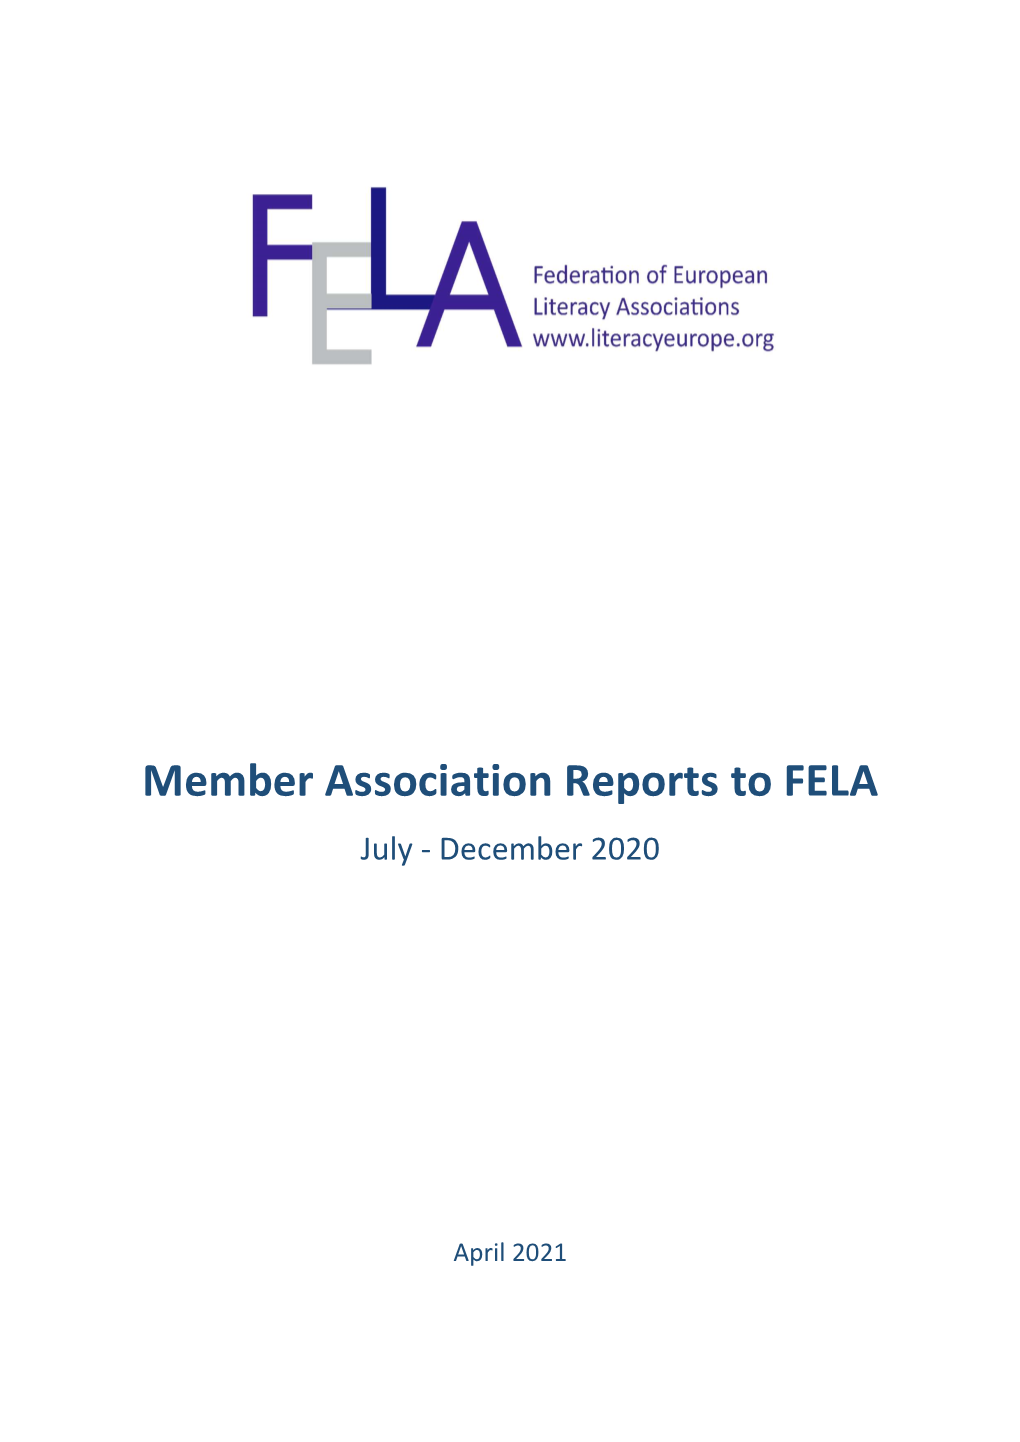 Member Association Reports to FELA July - December 2020